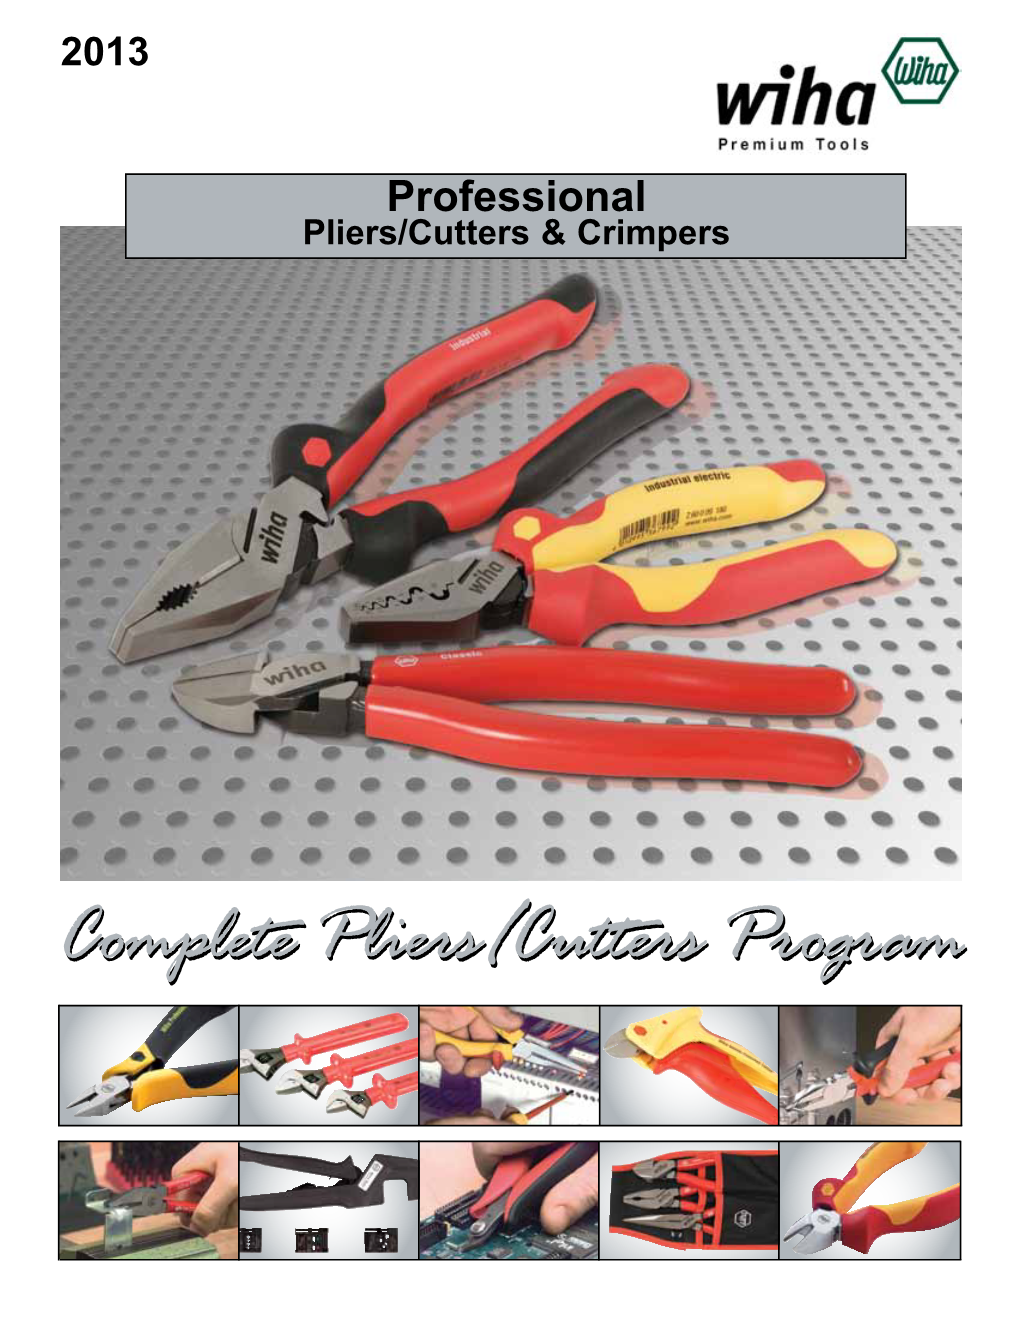 Complete Pliers/Cutters Program